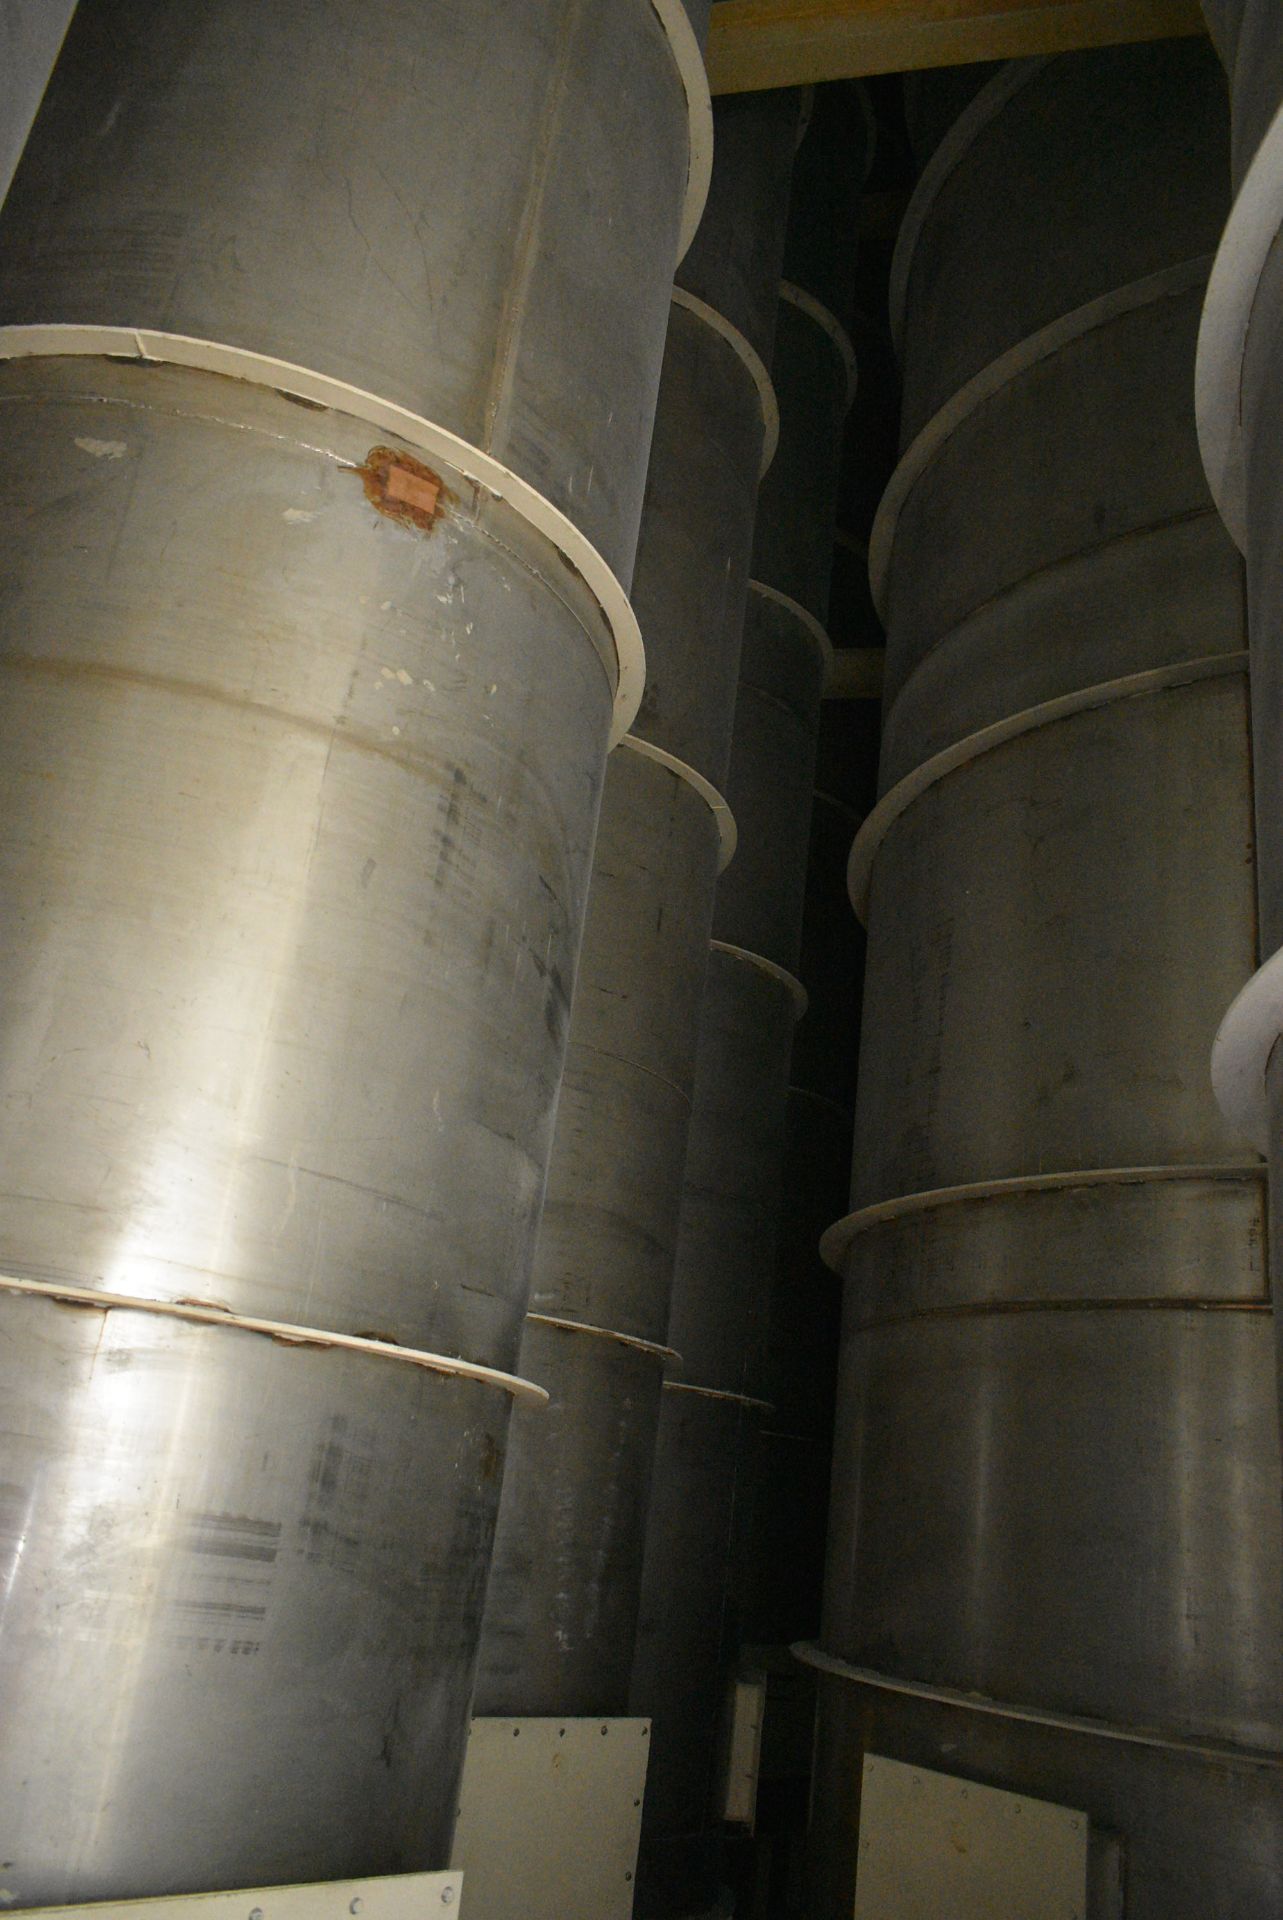 NEST OF NINE STAINLESS STEEL FLOUR STORAGE BINS, comprising two x 50 tonne cap., one x 25 tonne